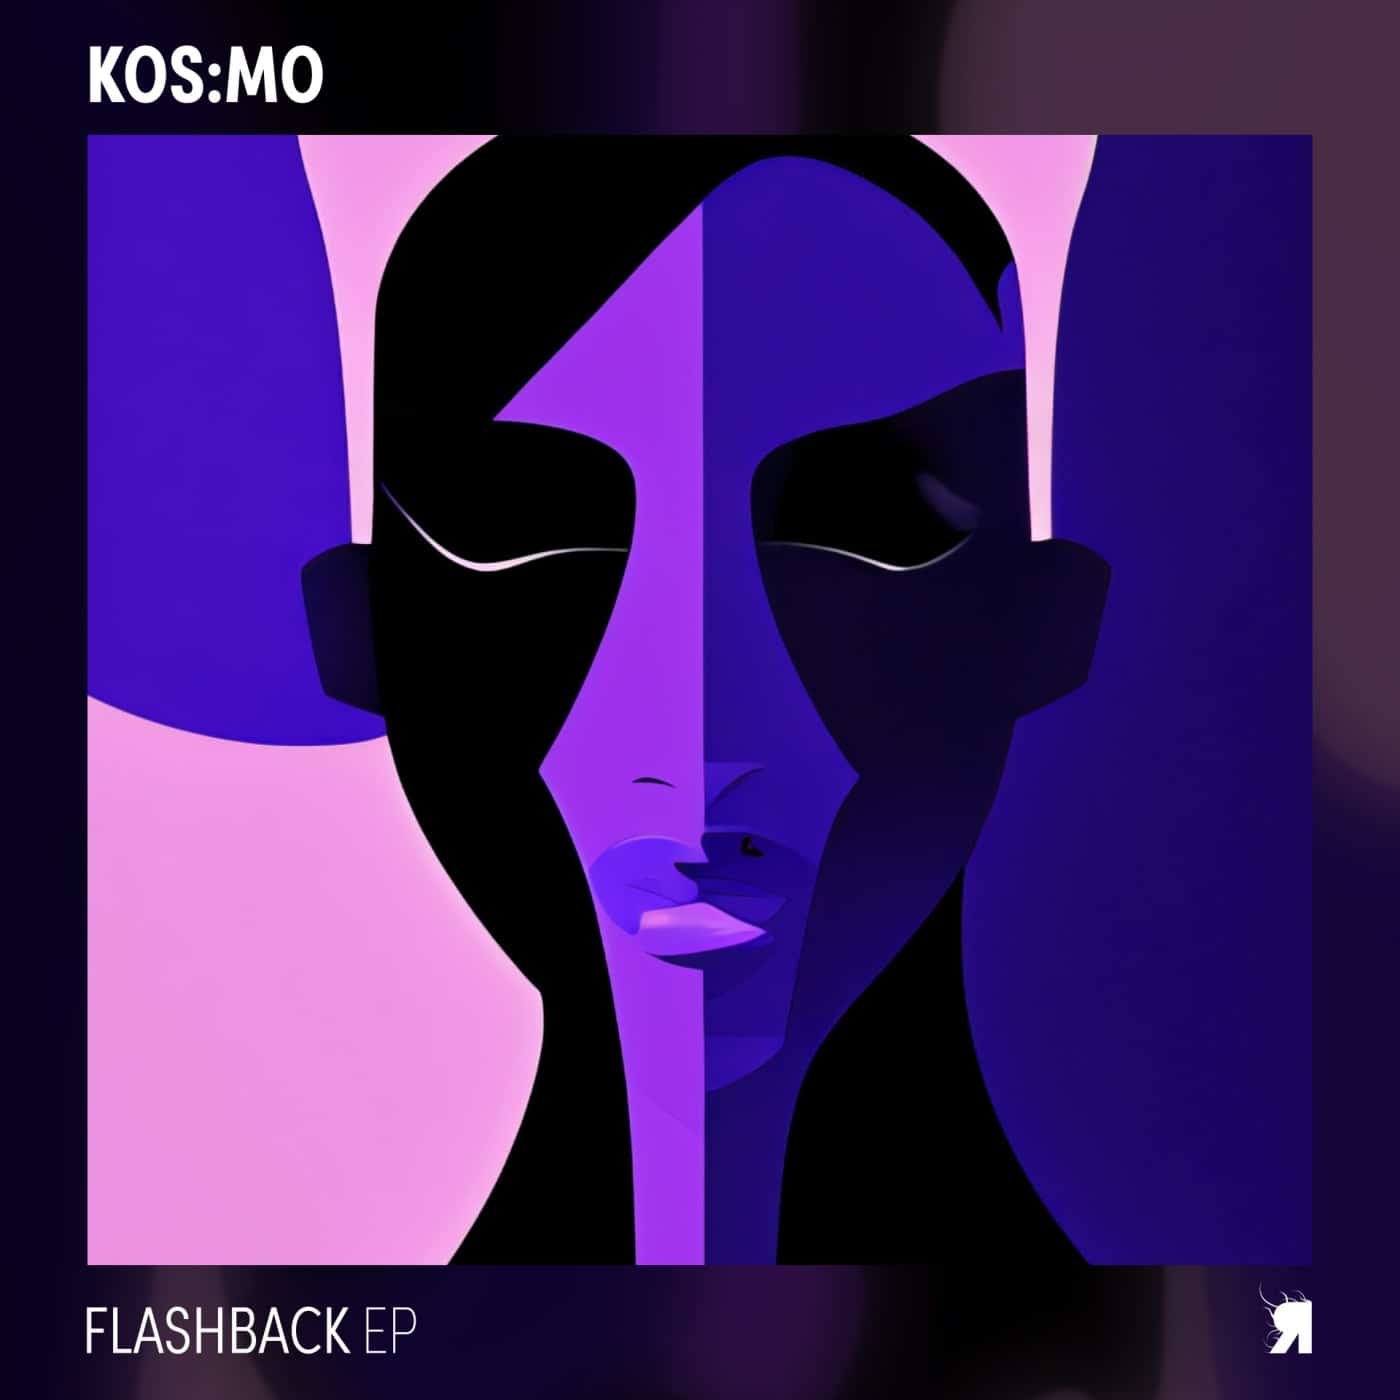 image cover: Kos:mo - Flashback EP by Respekt Recordings